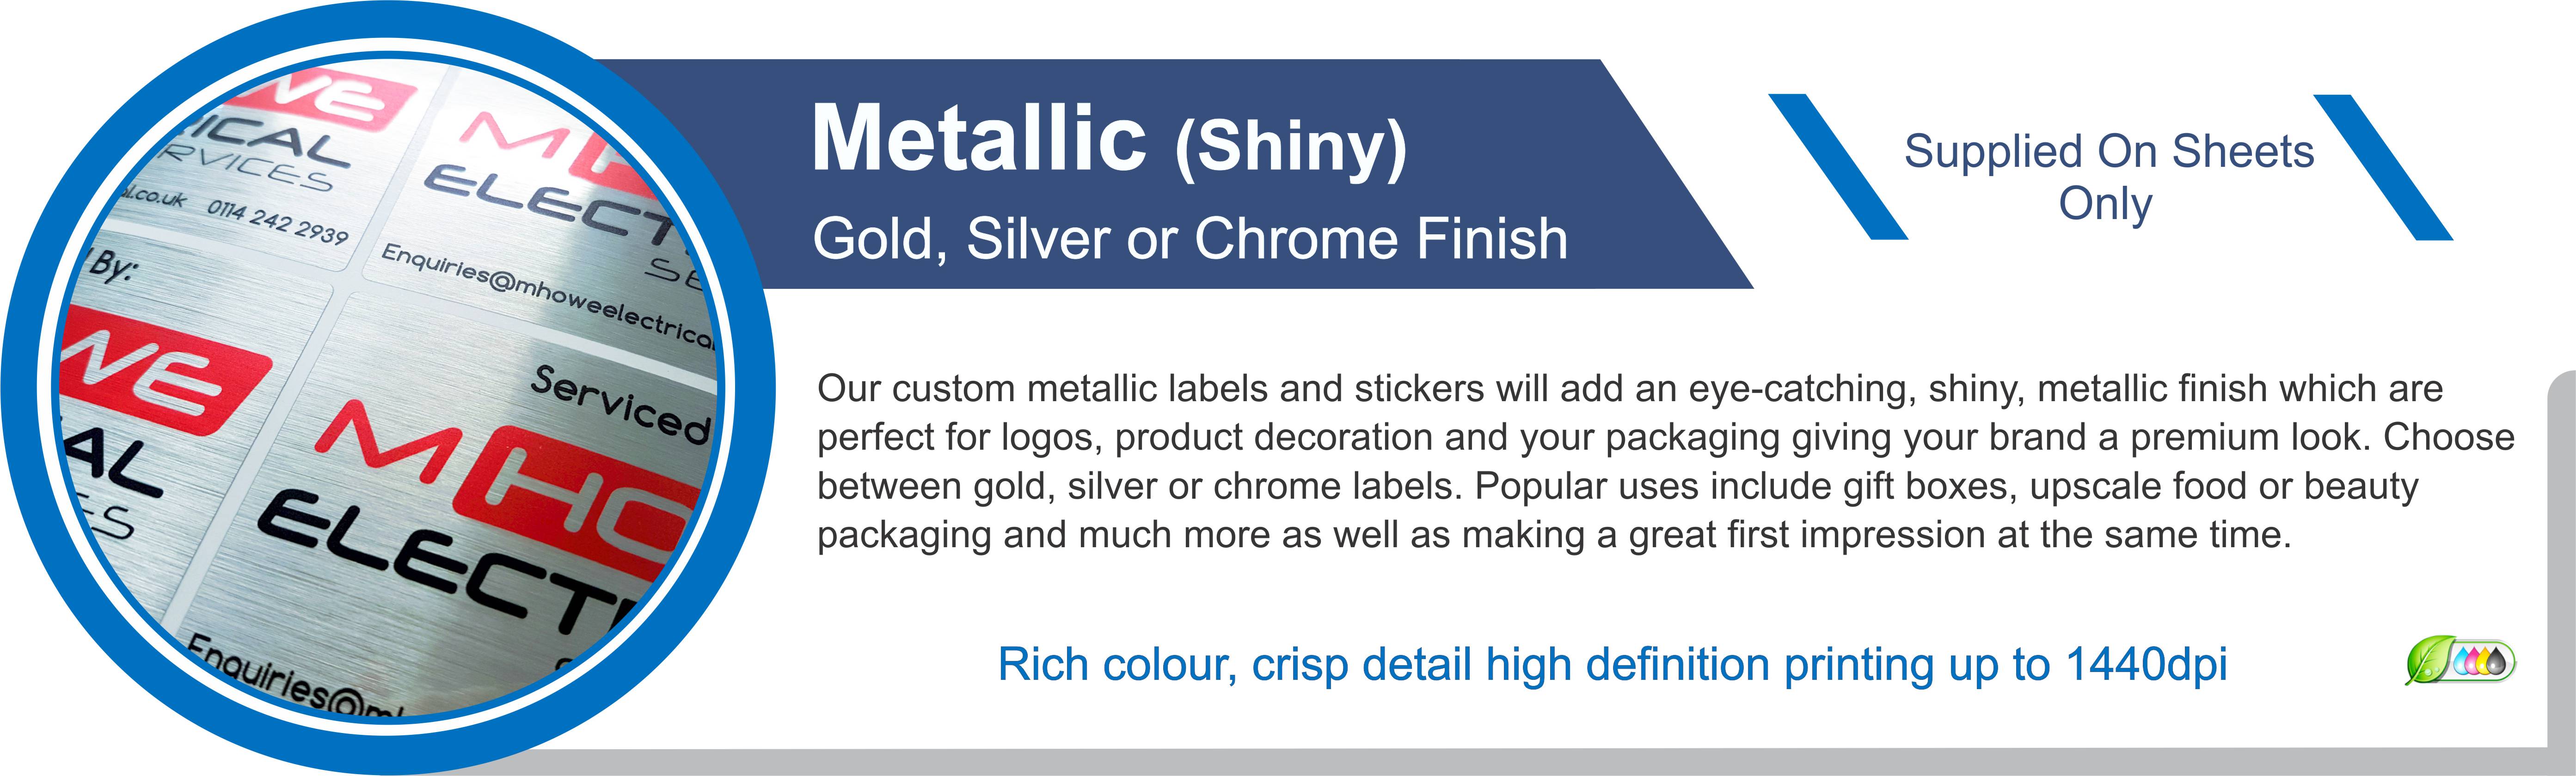 Metallic Labels / Stickers